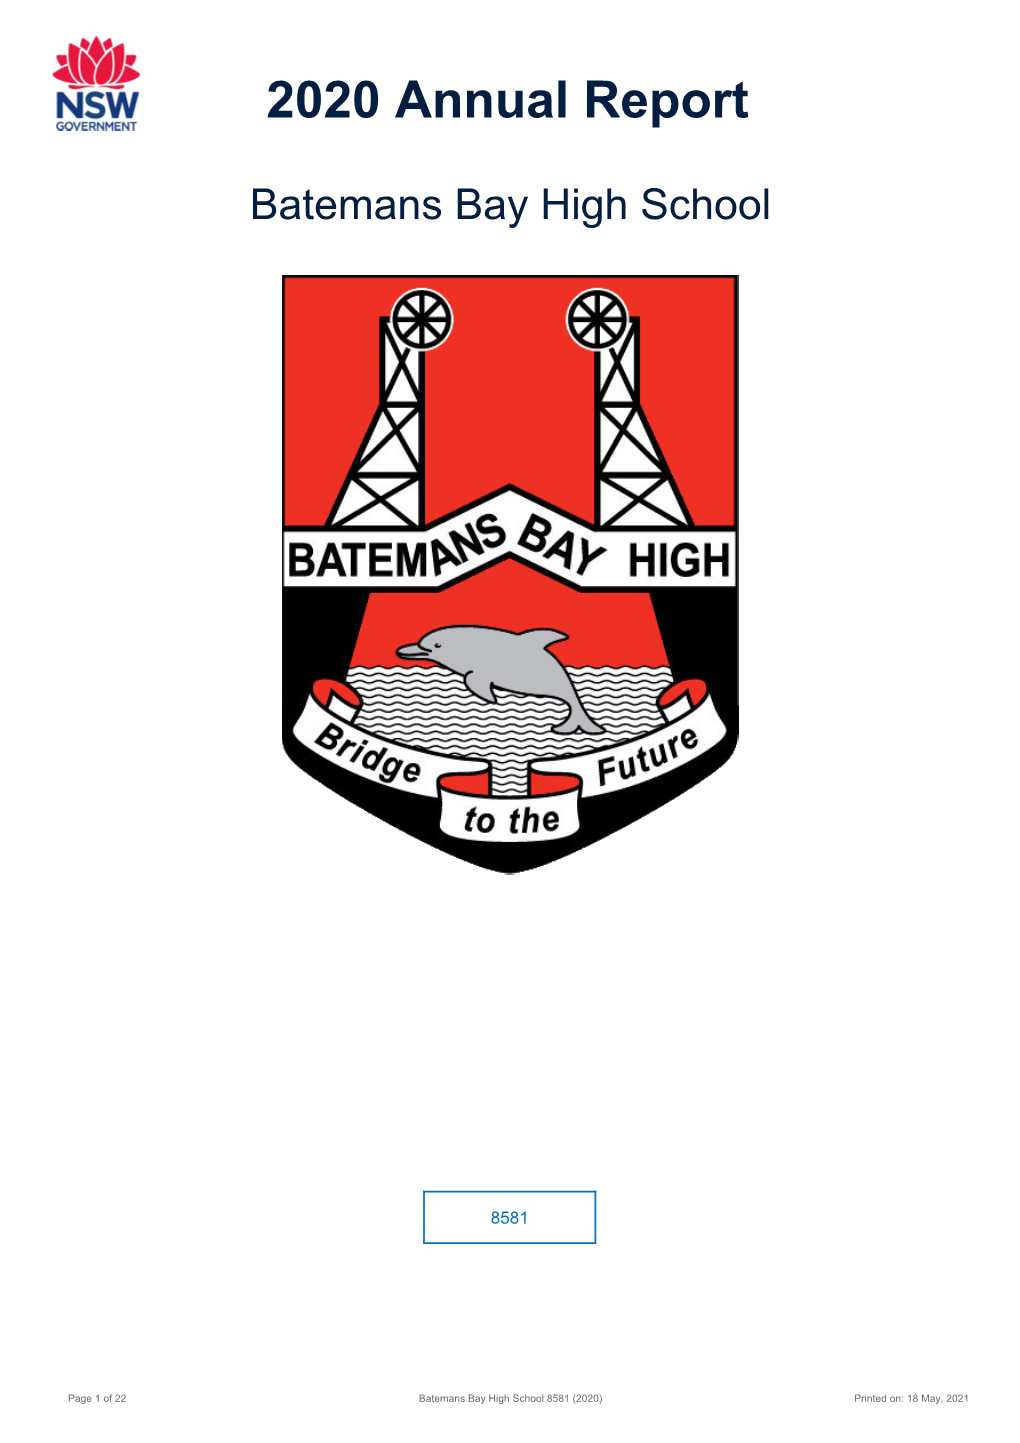 2020 Batemans Bay High School Annual Report